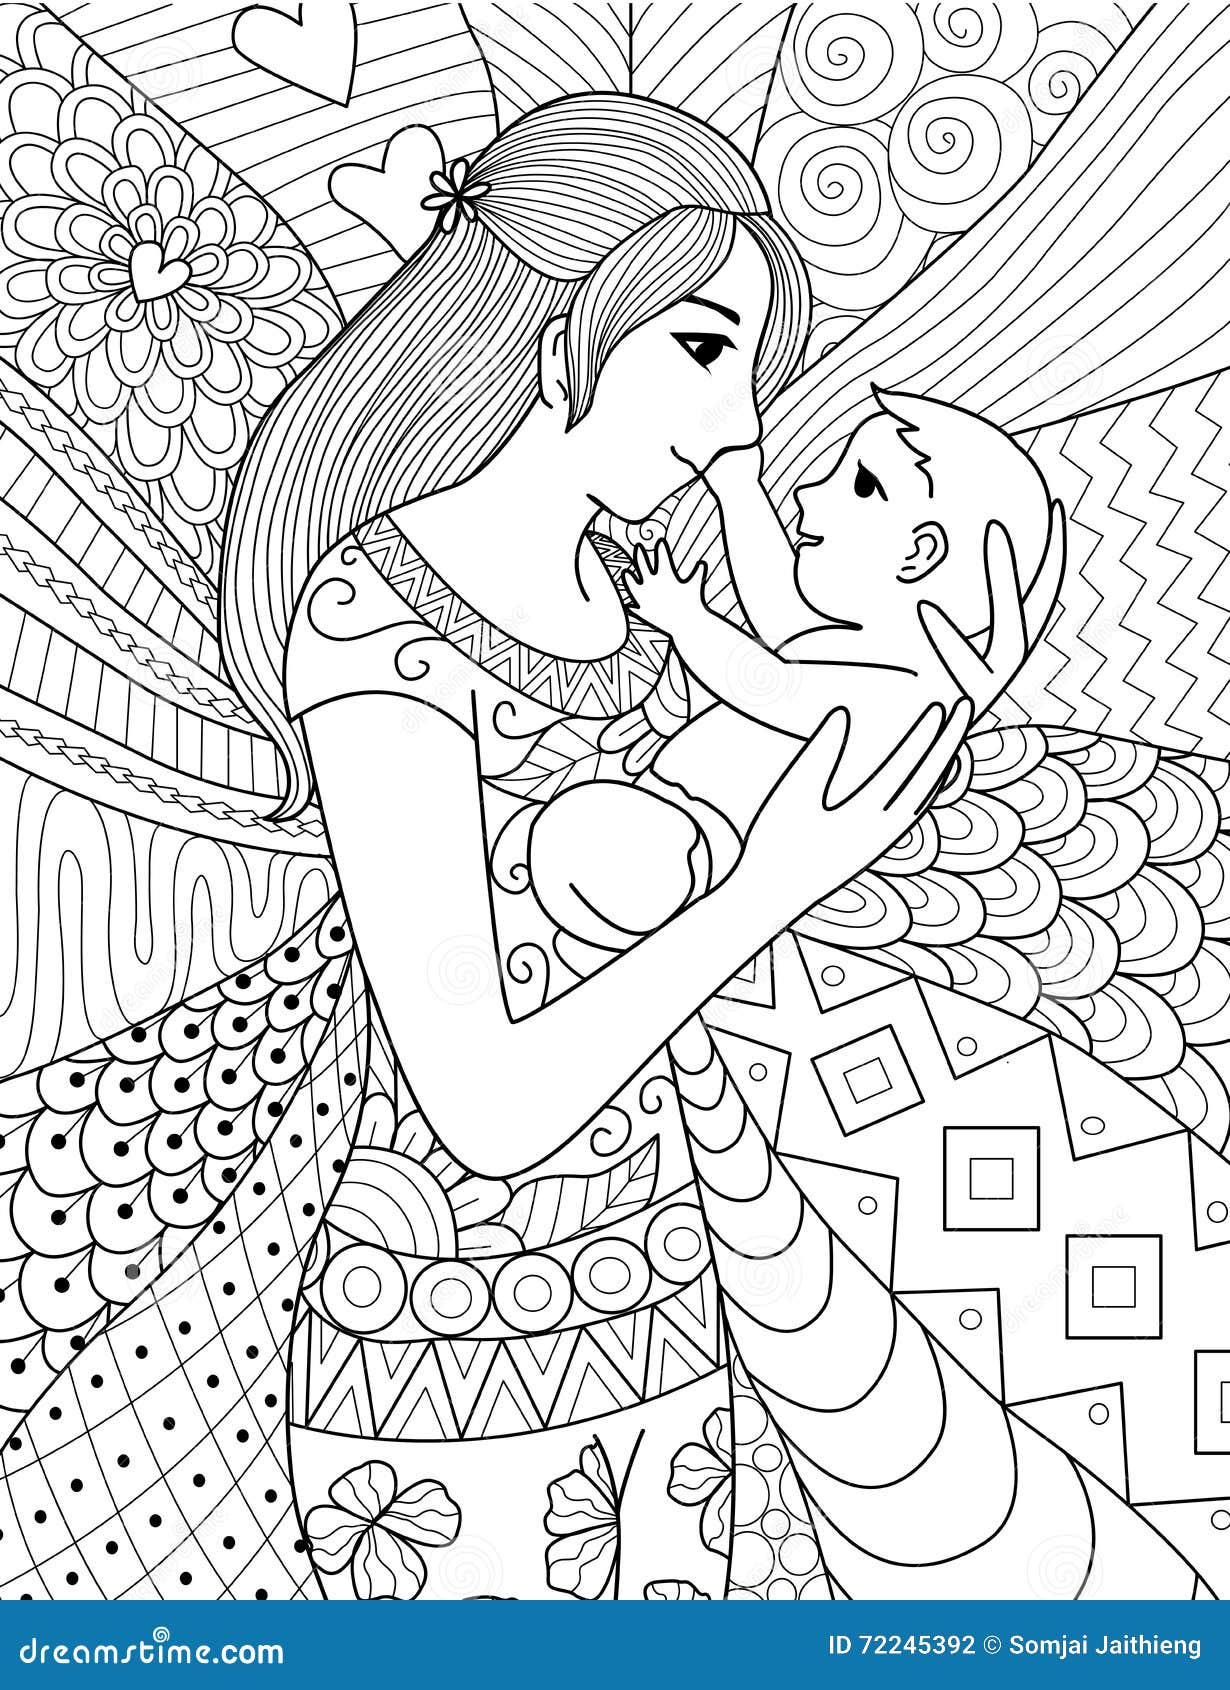 Mother Holding Her Baby Clean Line Doodle Art Design Stock Vector